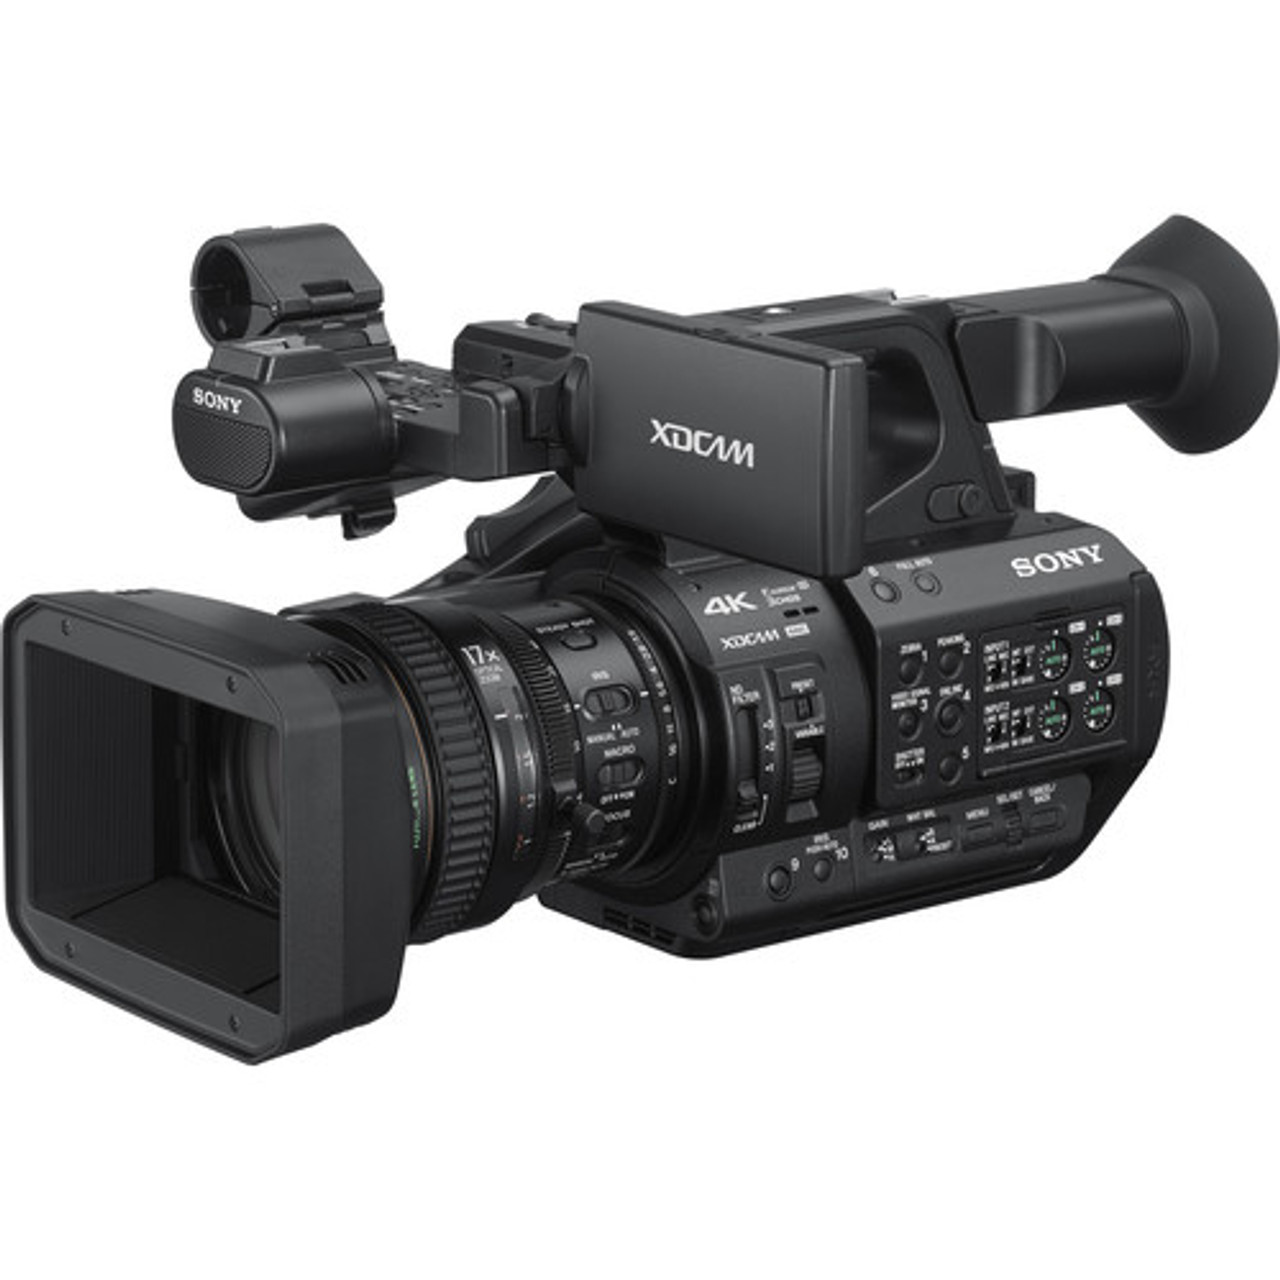 4K BNC Camera vs 4K IP Camera Video Resolution Comparison